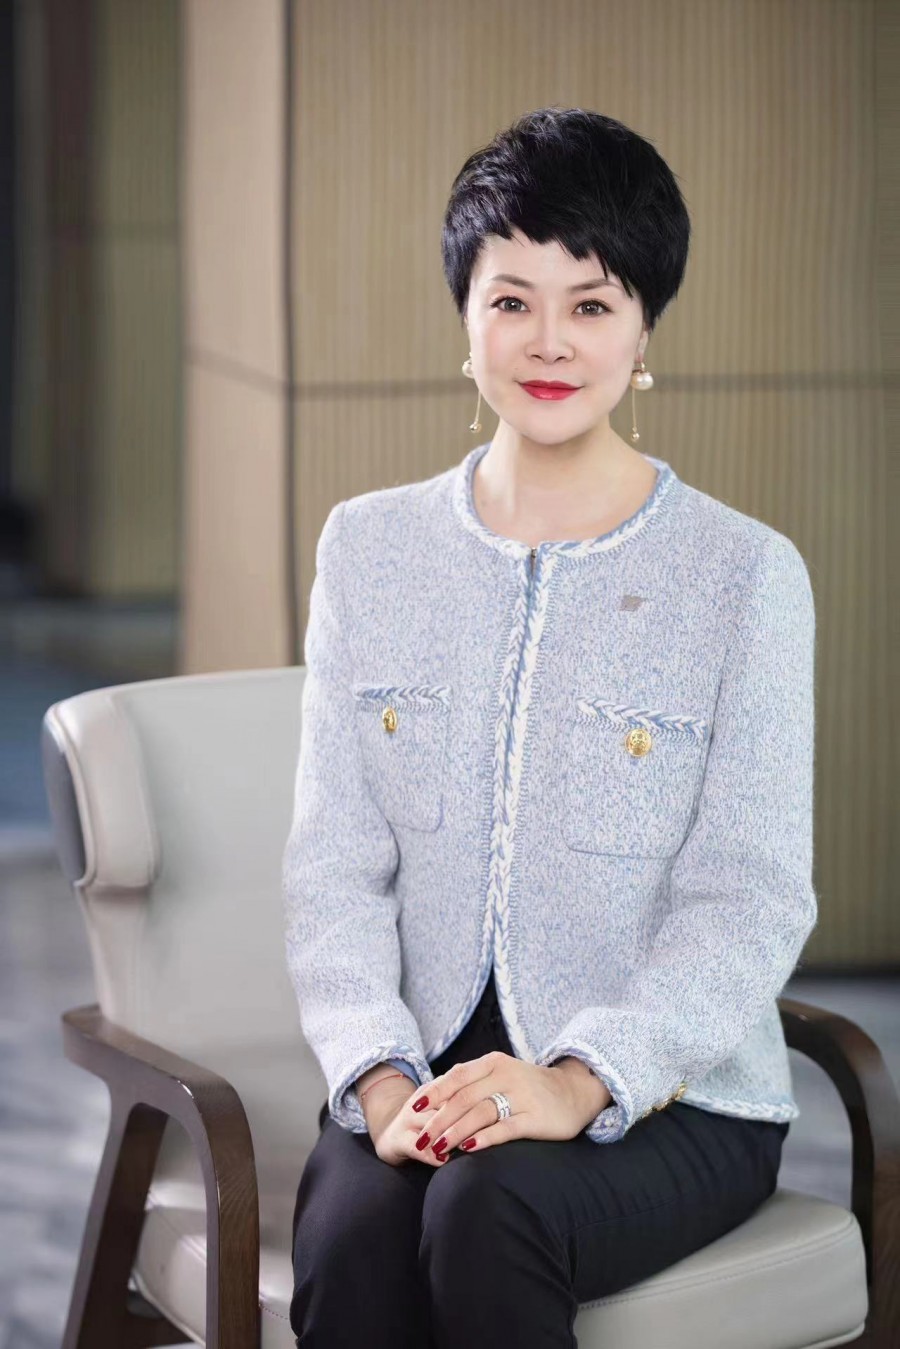 Ms. Zinnia Zhang